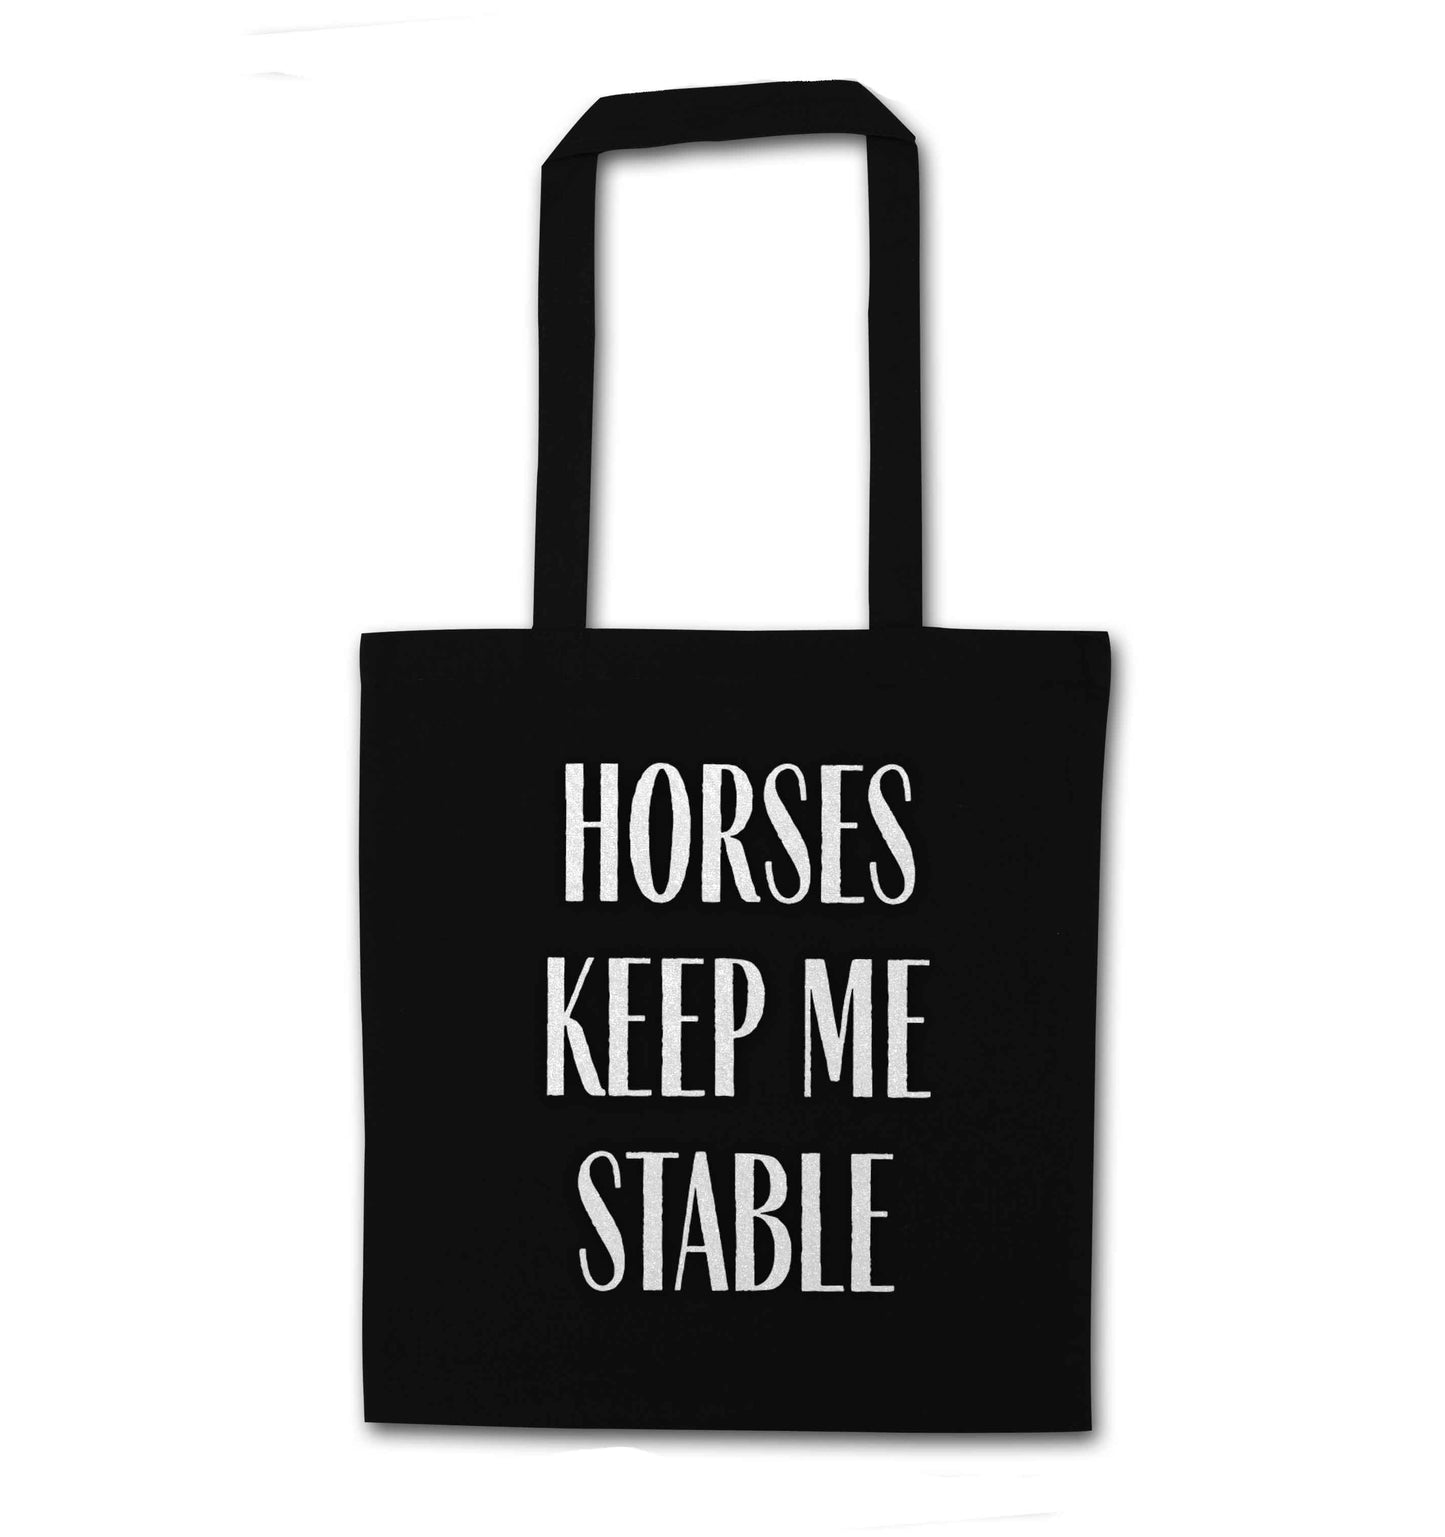 Horses keep me stable black tote bag